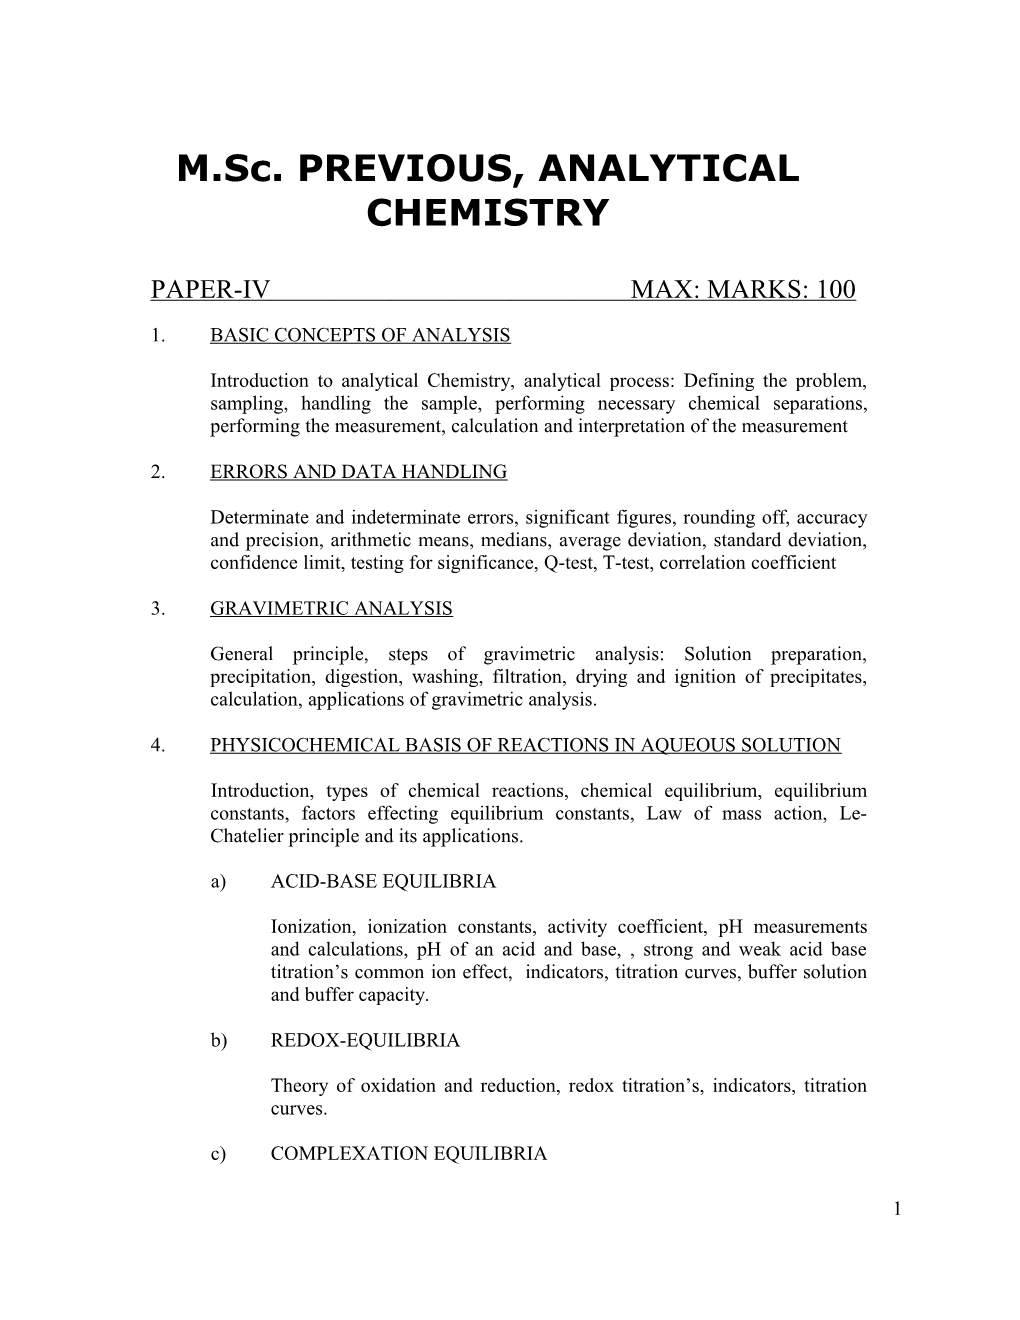 M.Sc. PREVIOUS, ANALYTICAL CHEMISTRY